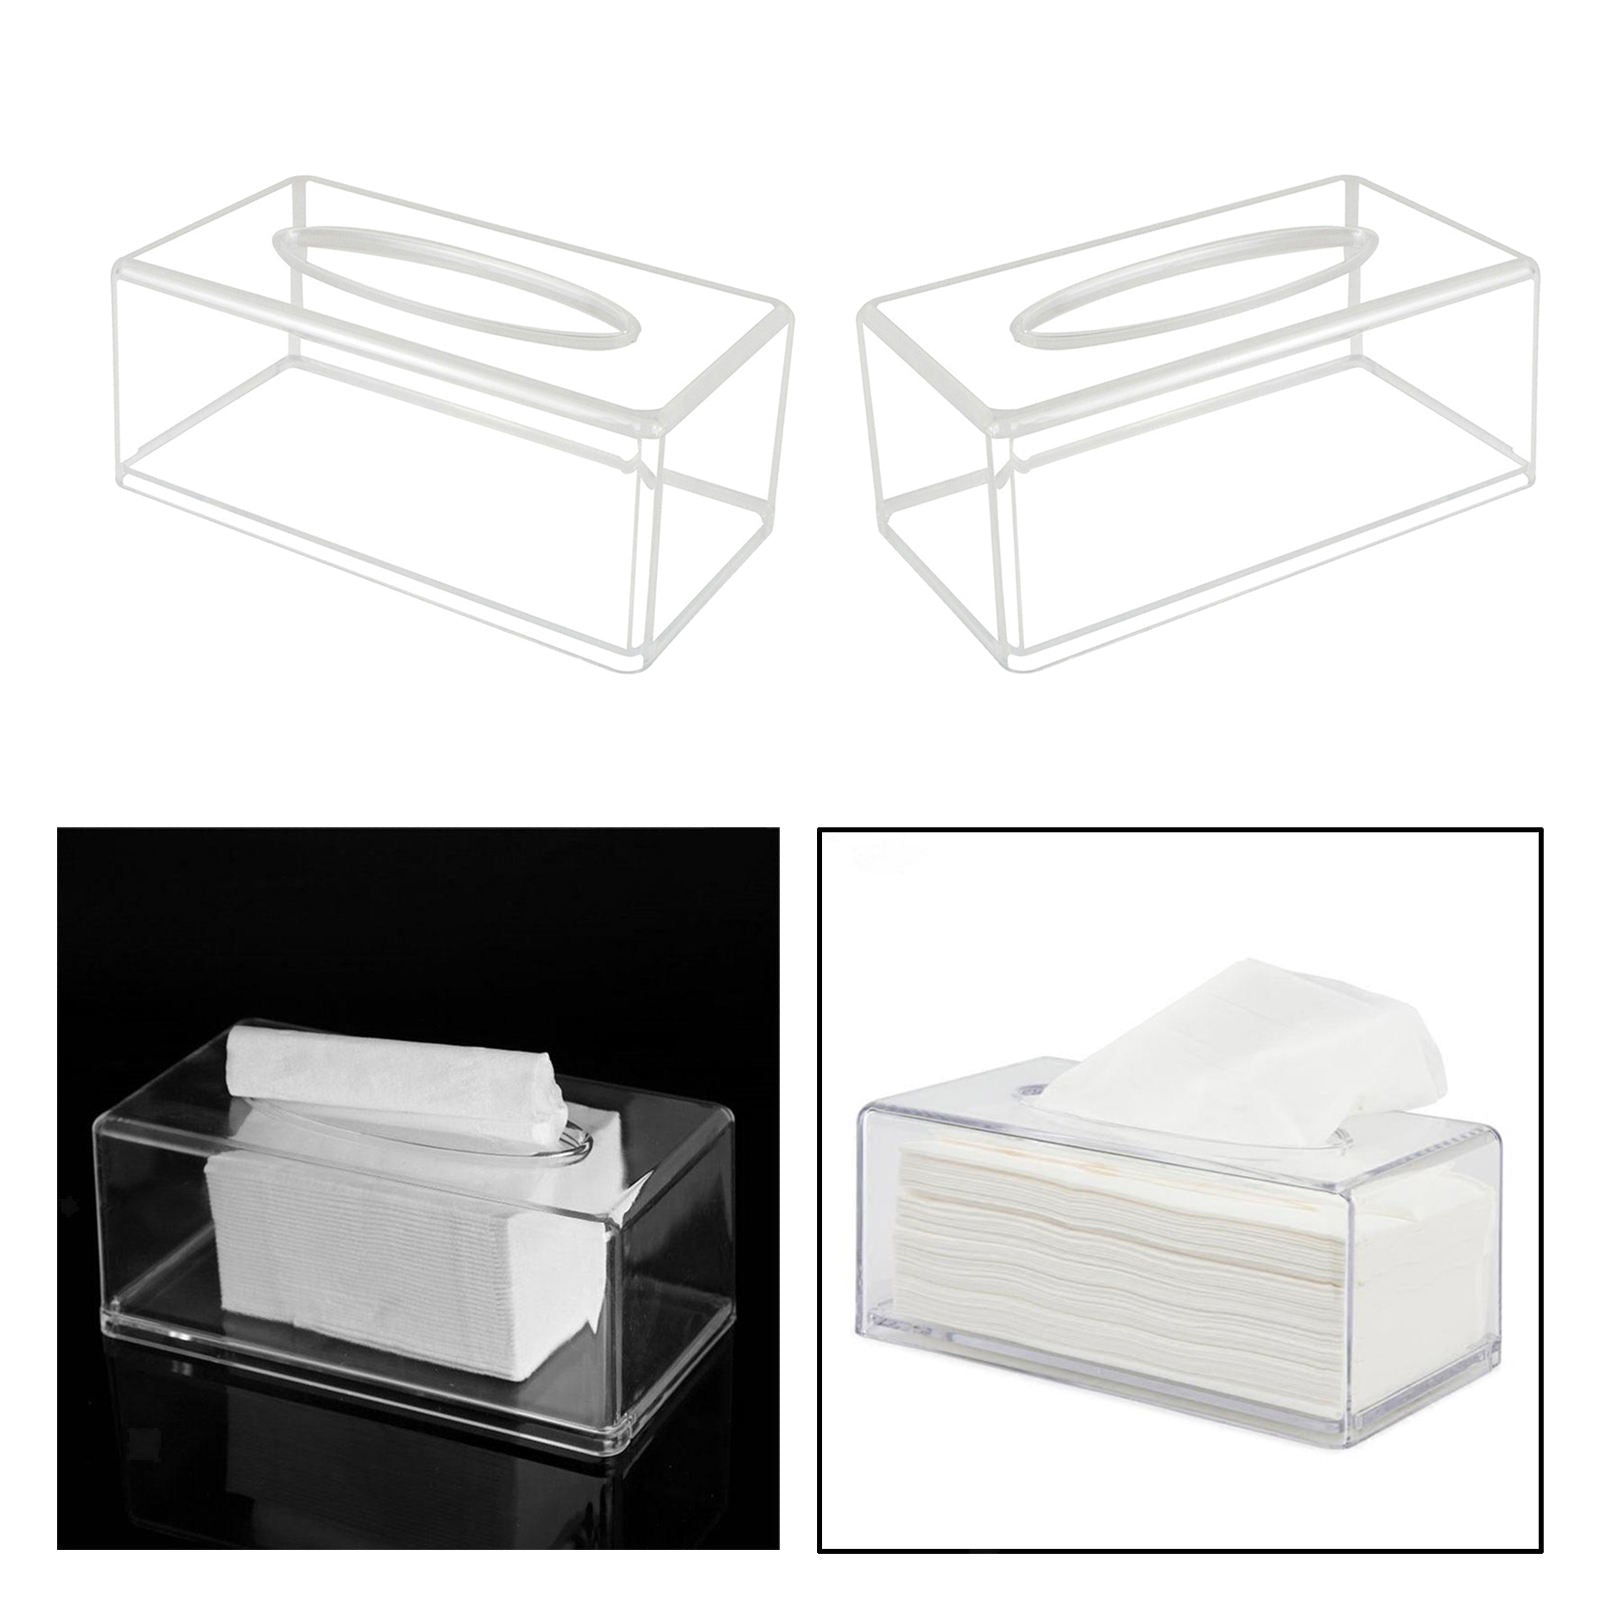 2 Pieces Modern Clear Acrylic Tissue Box Cover Decorative for Bathroom Desk